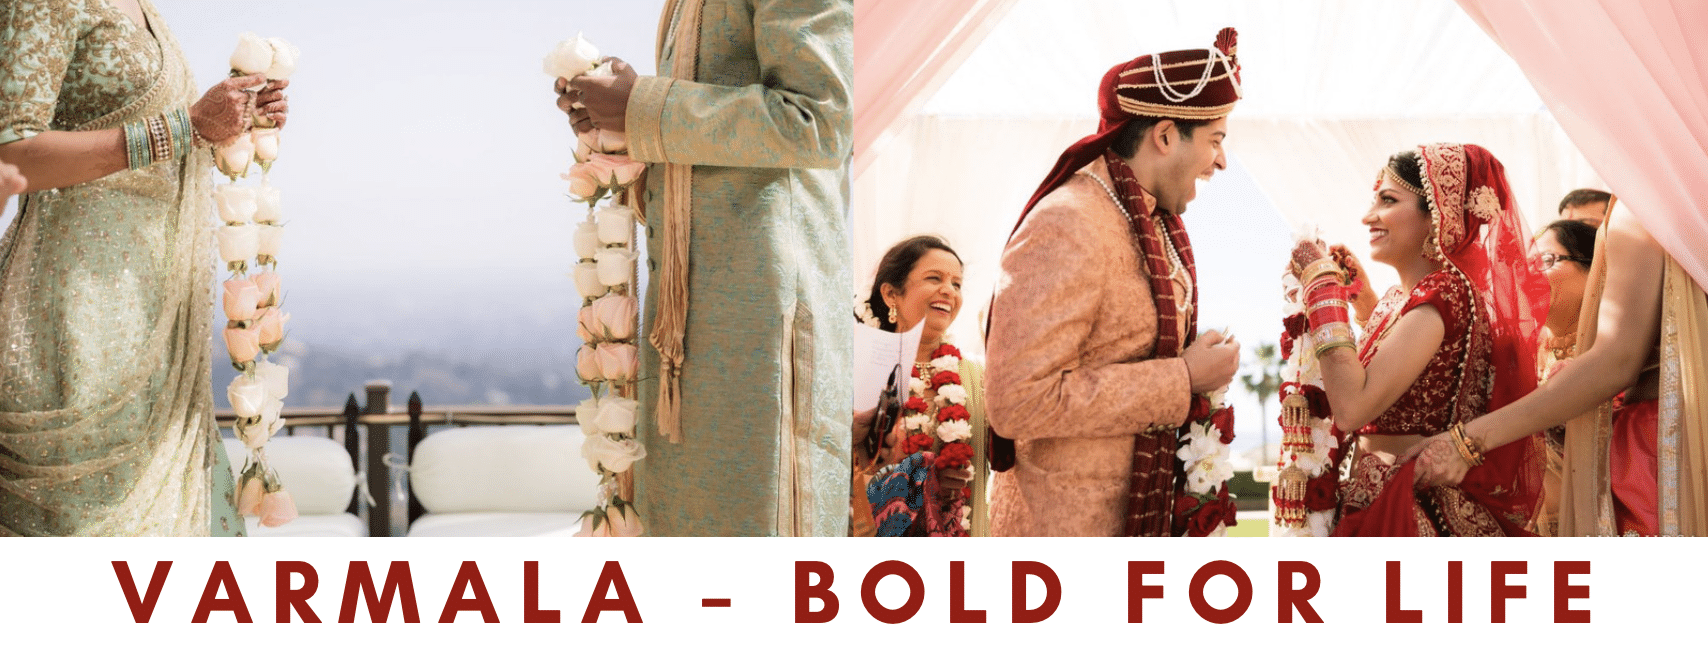 varmala - Indian Wedding - Bond for life